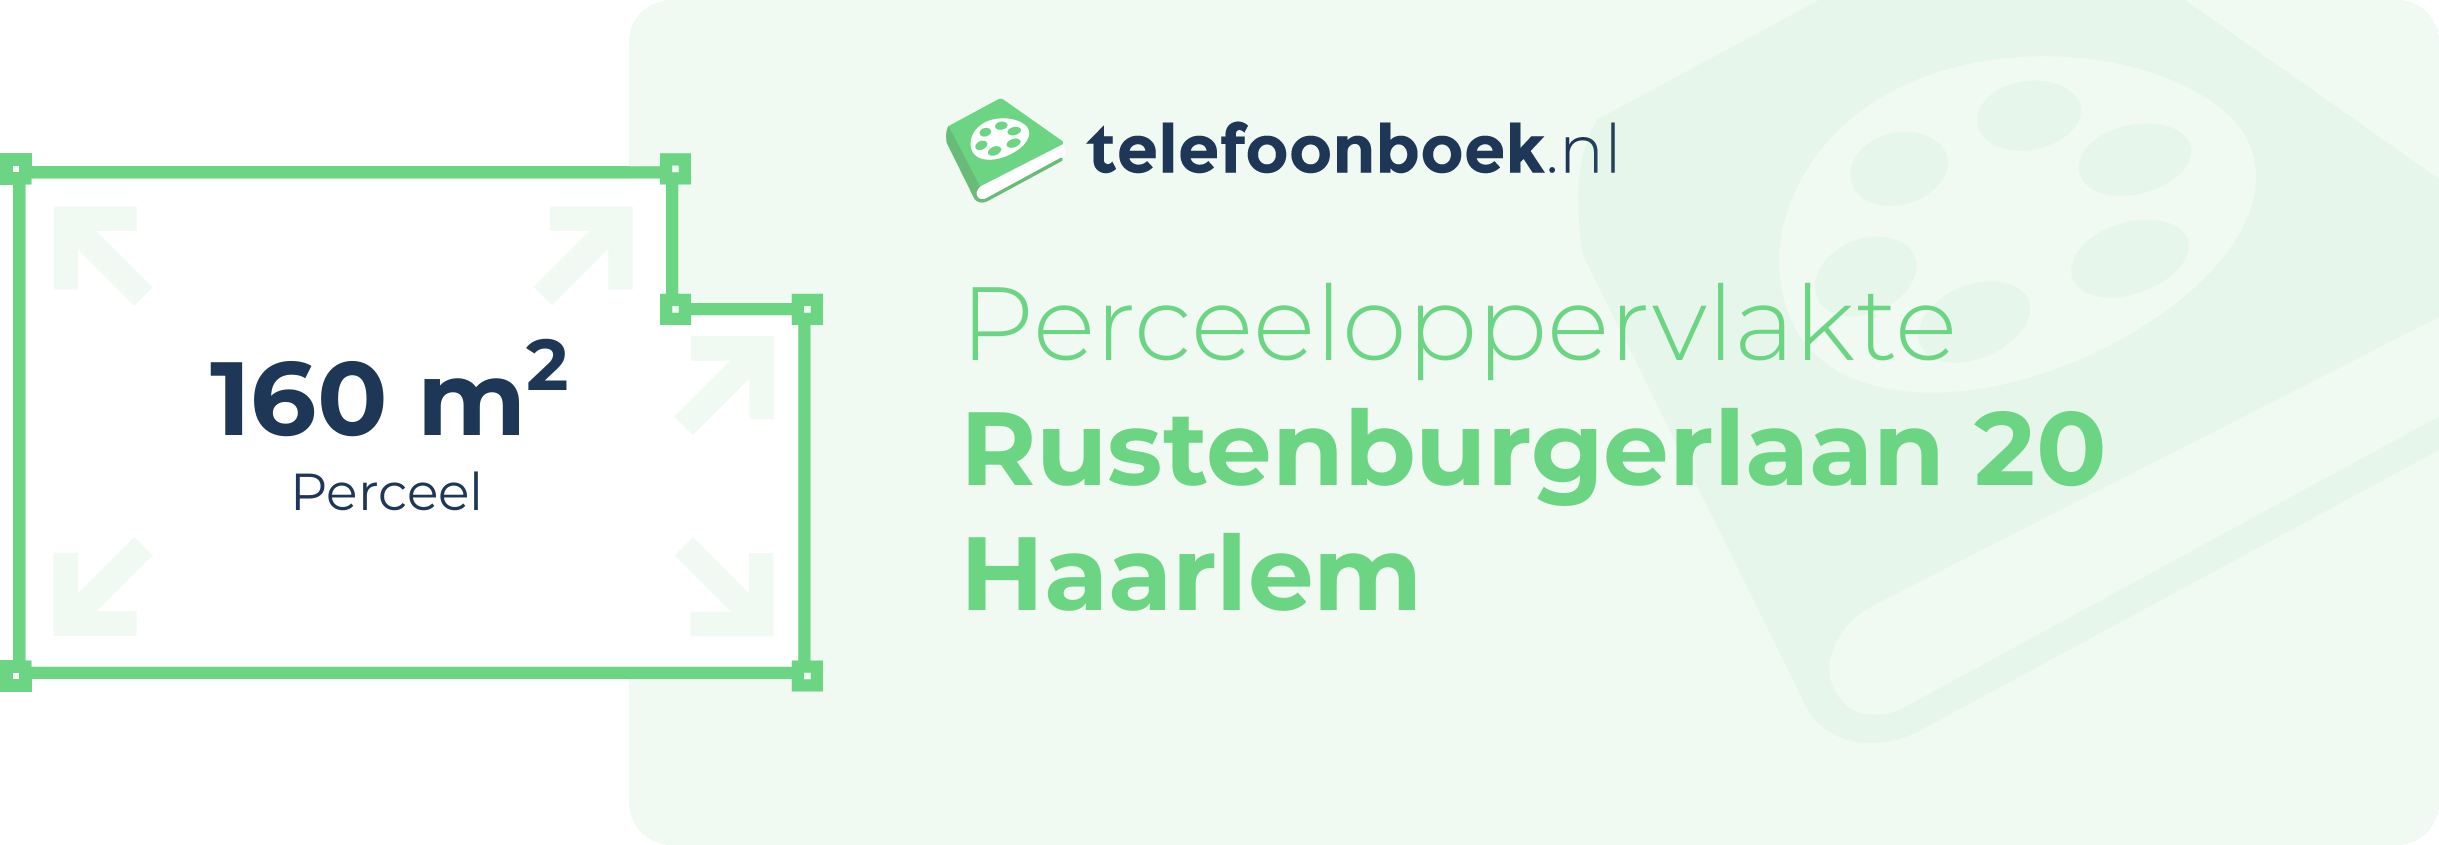 Perceeloppervlakte Rustenburgerlaan 20 Haarlem